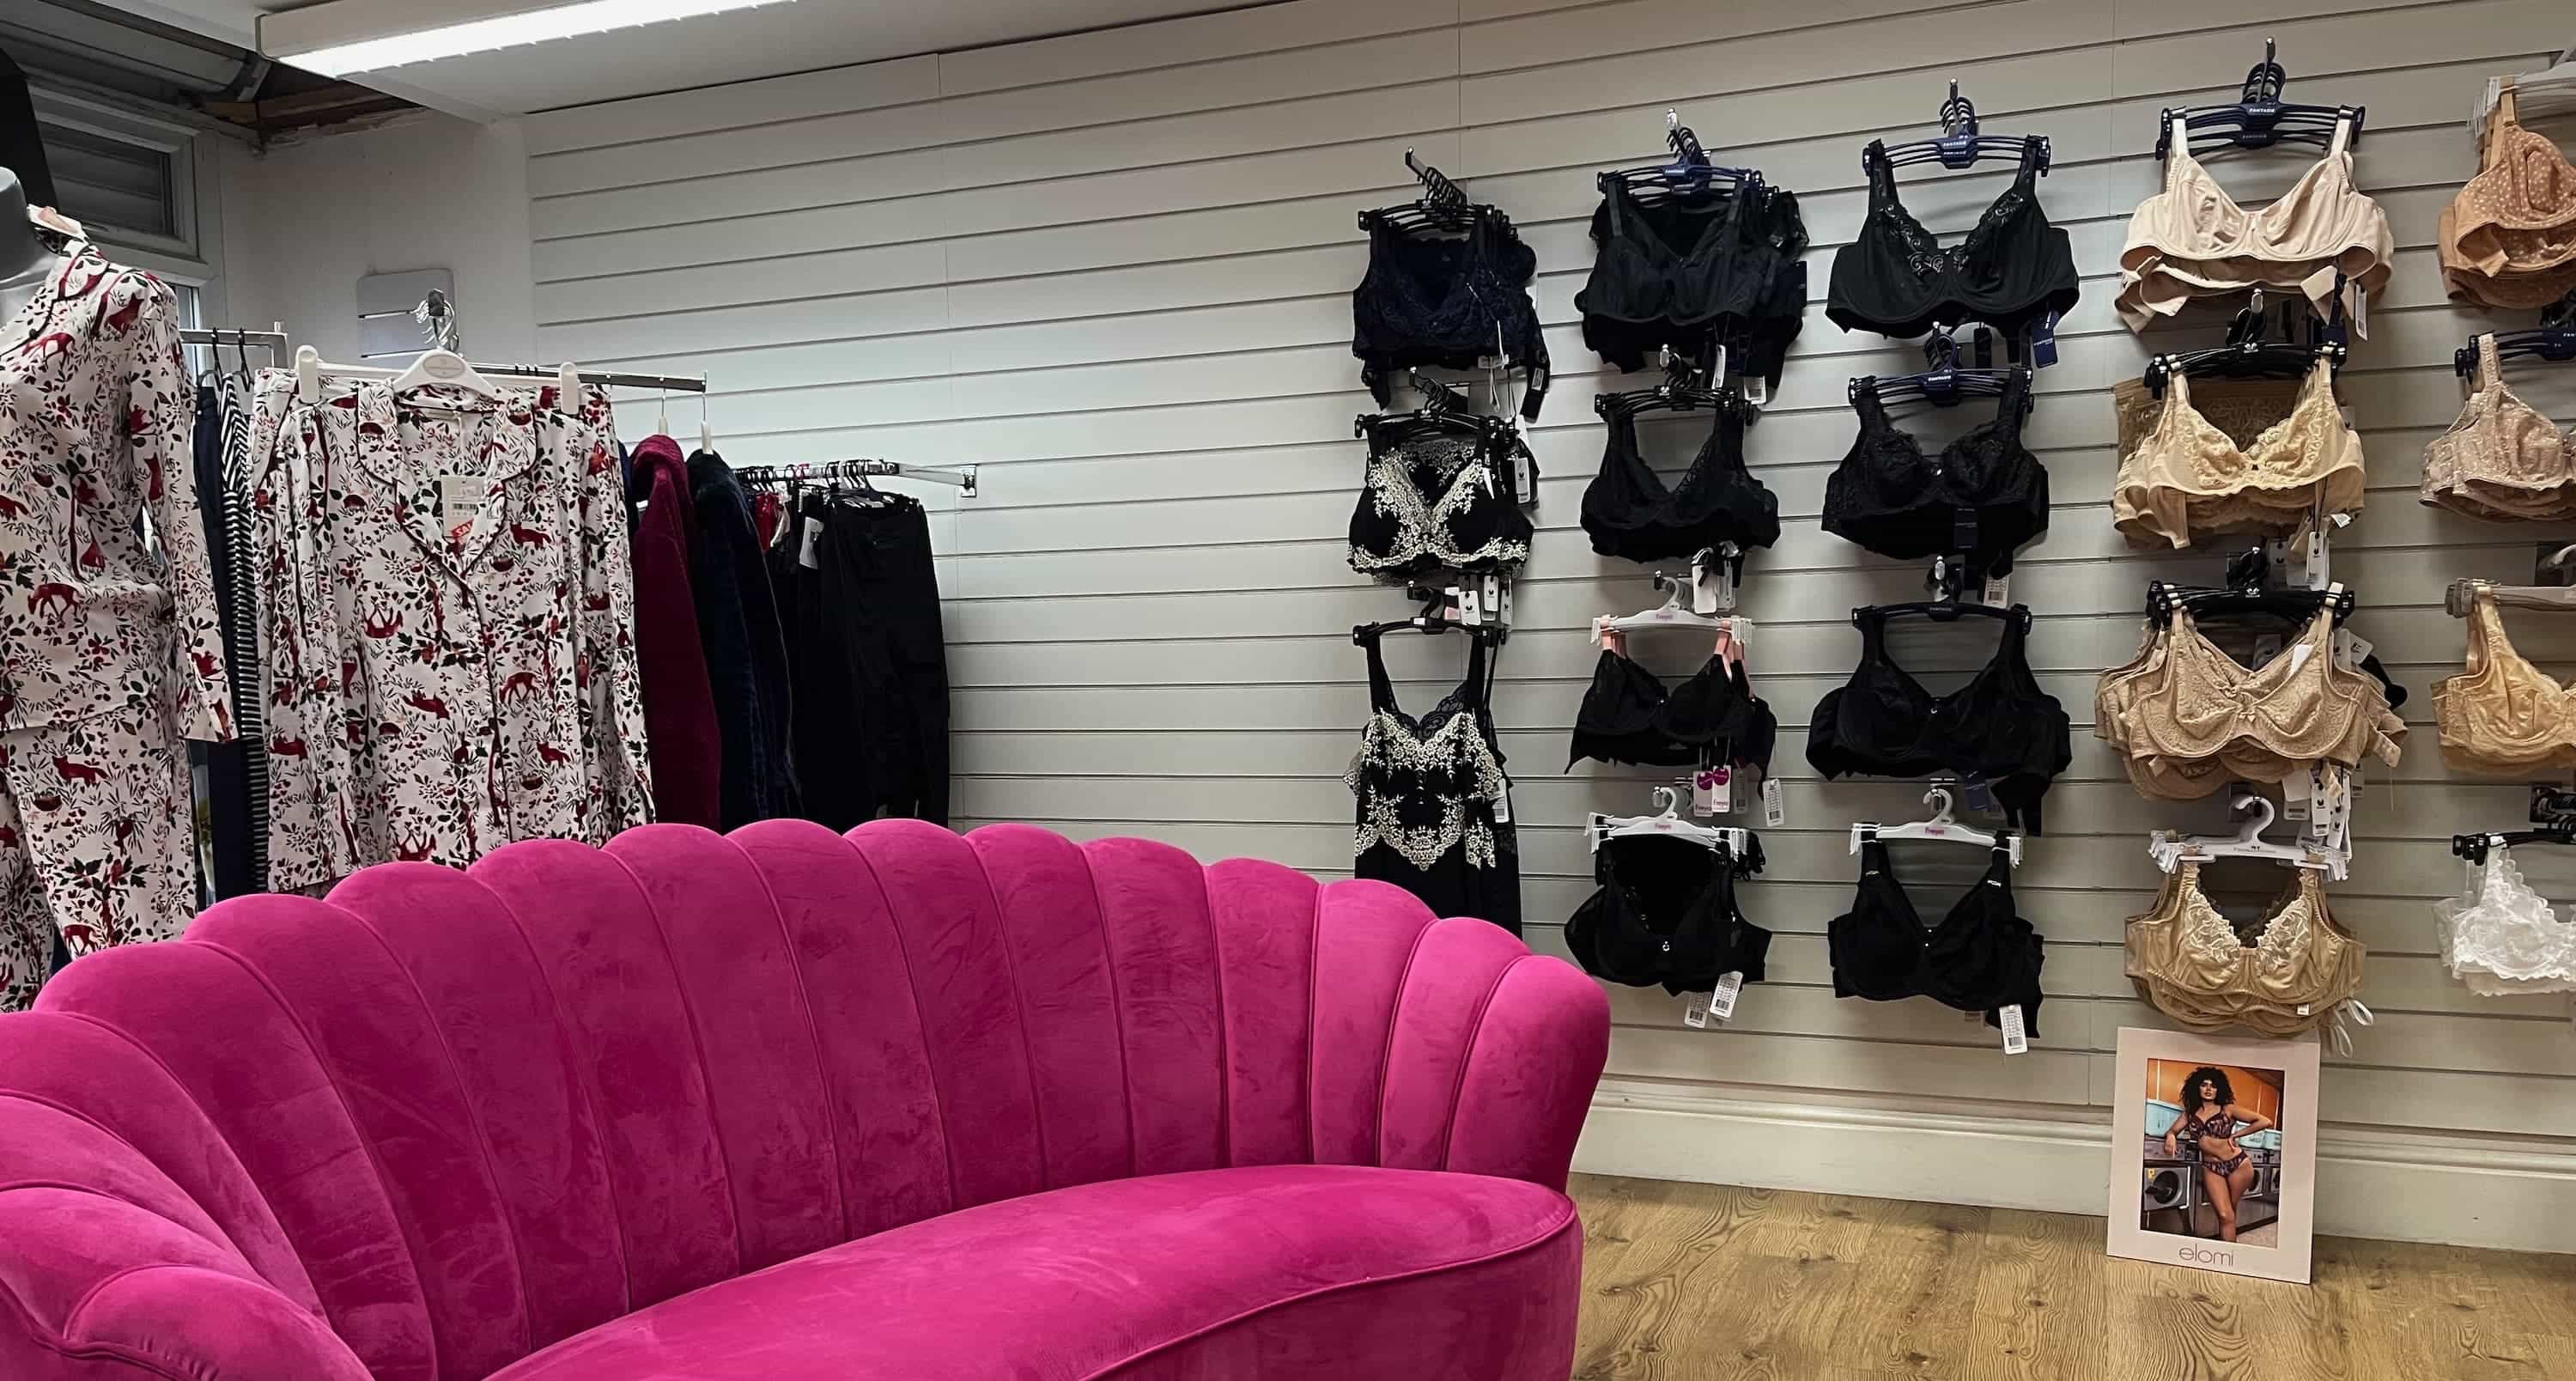 Pretty Woman Bras pink chair inside the shop